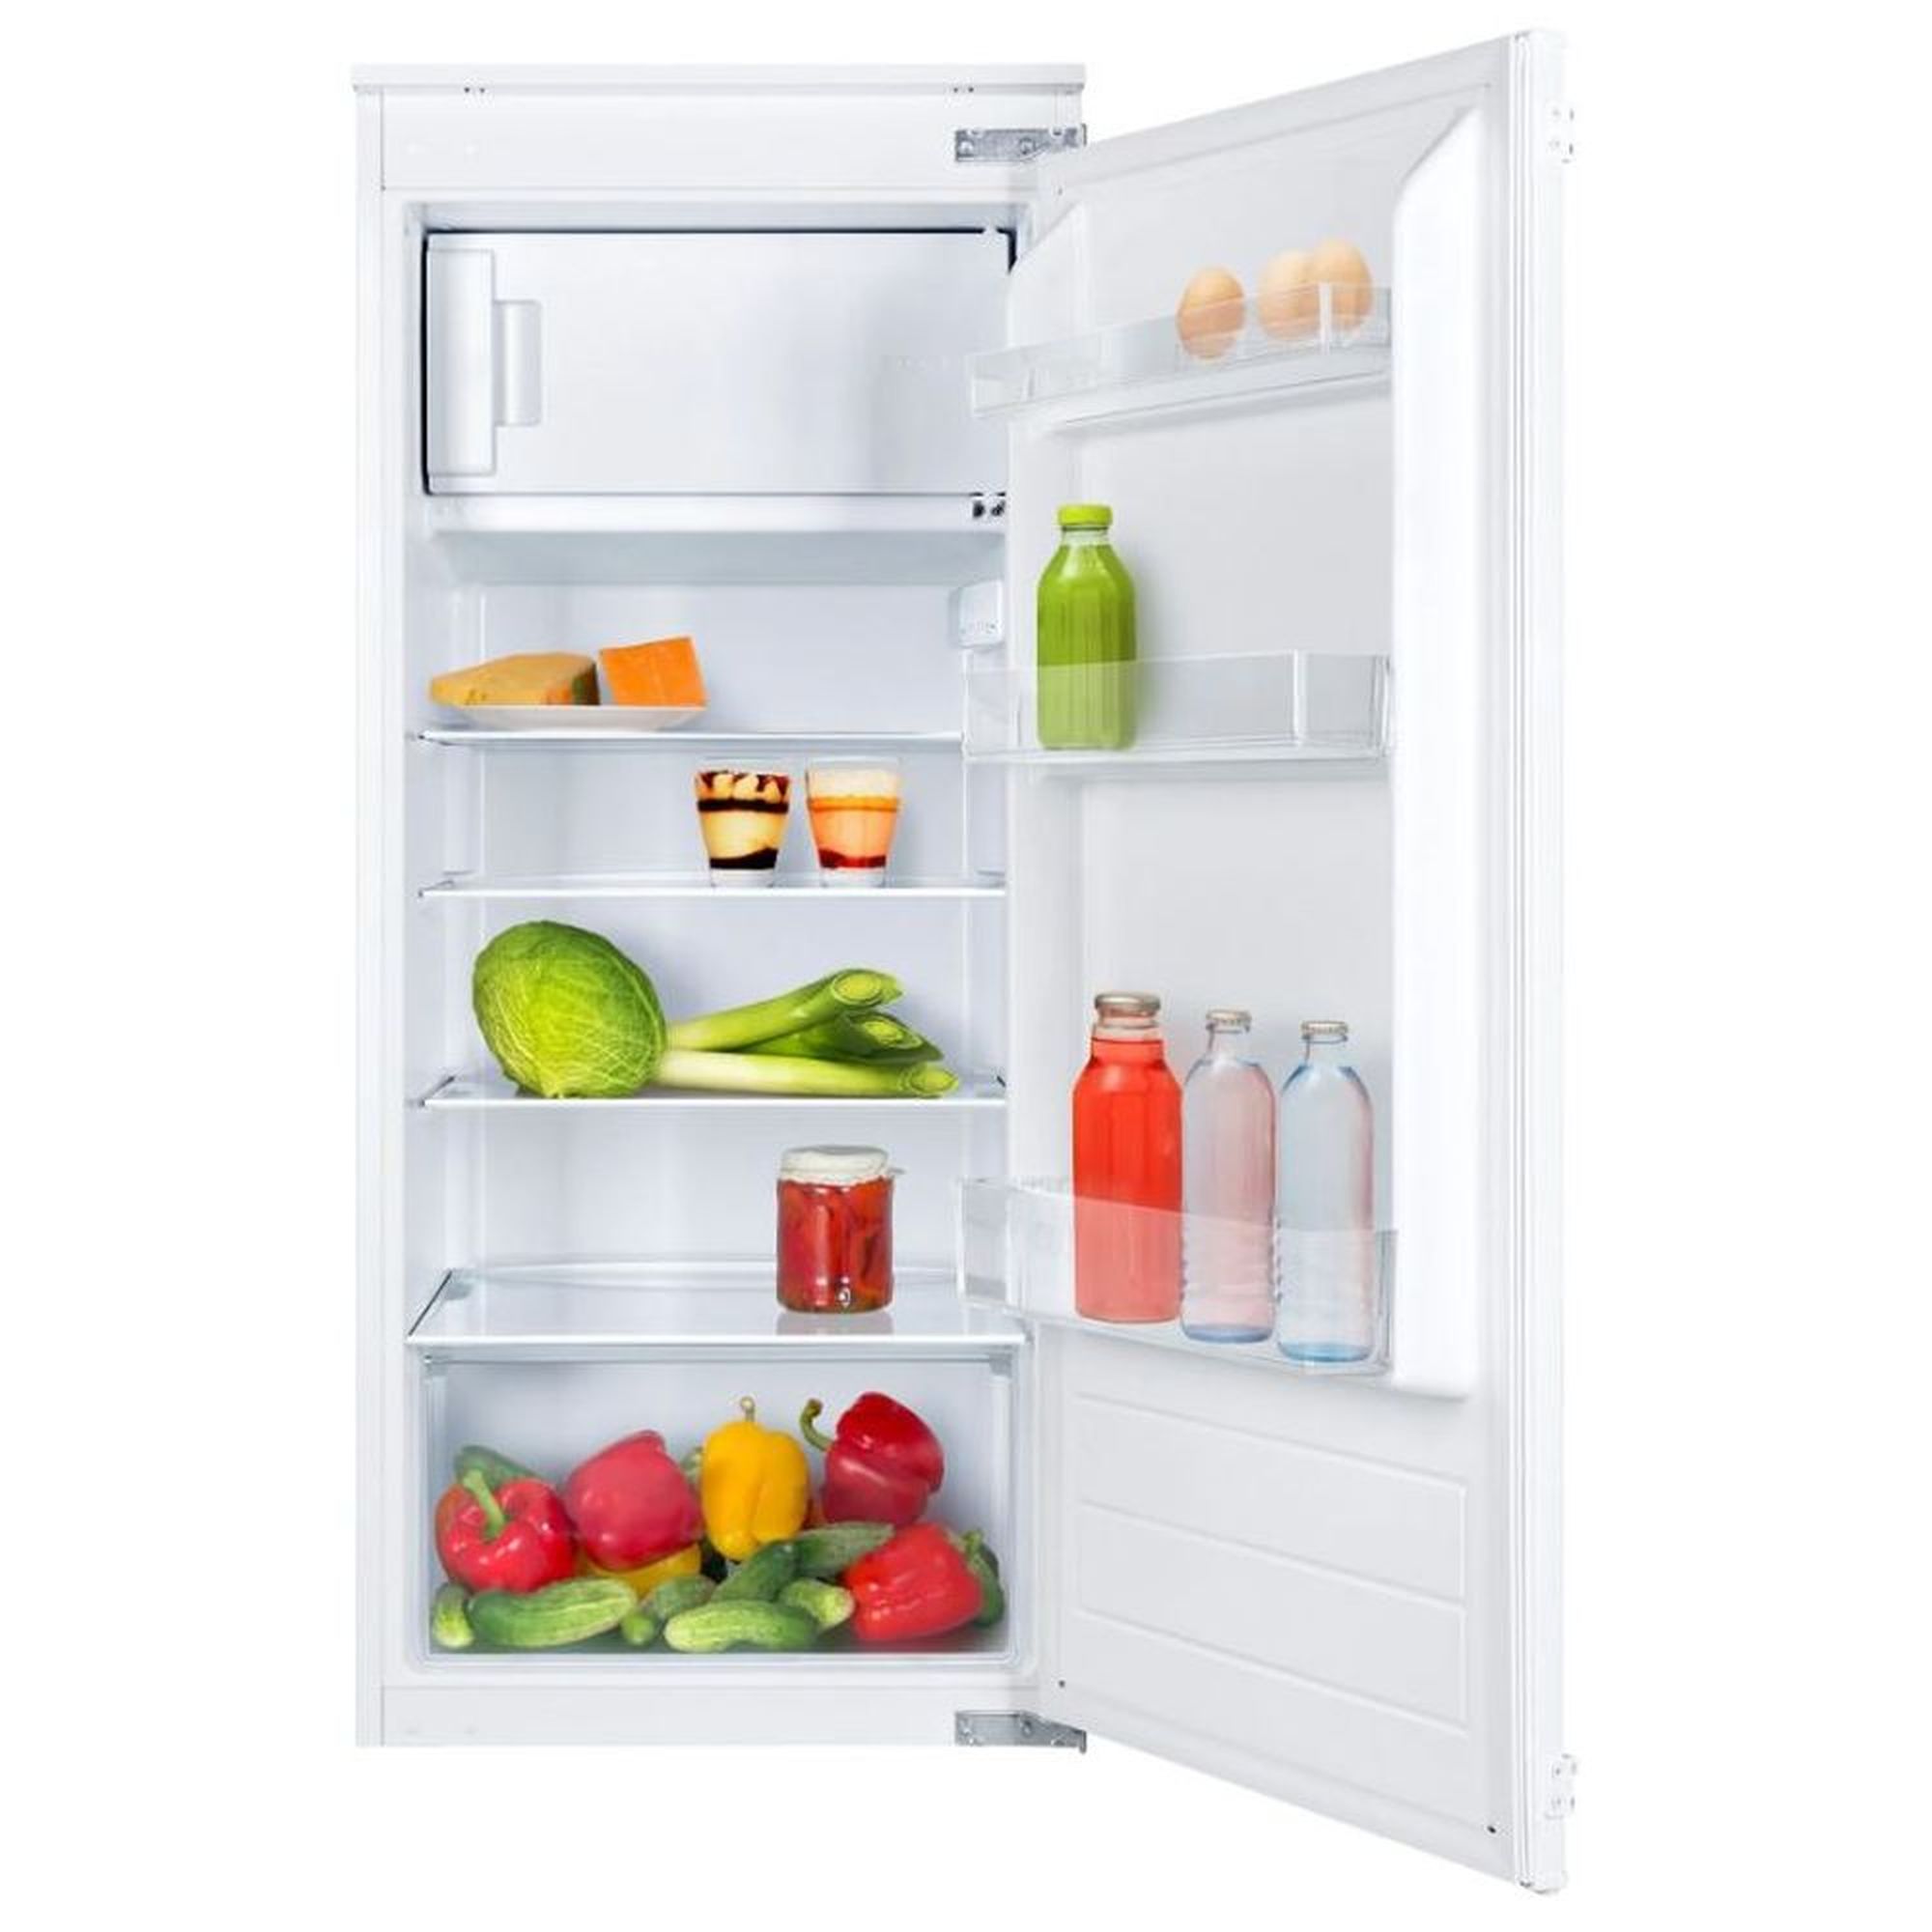 362 EKSS 210 - Kühlschränke Weiß Amica